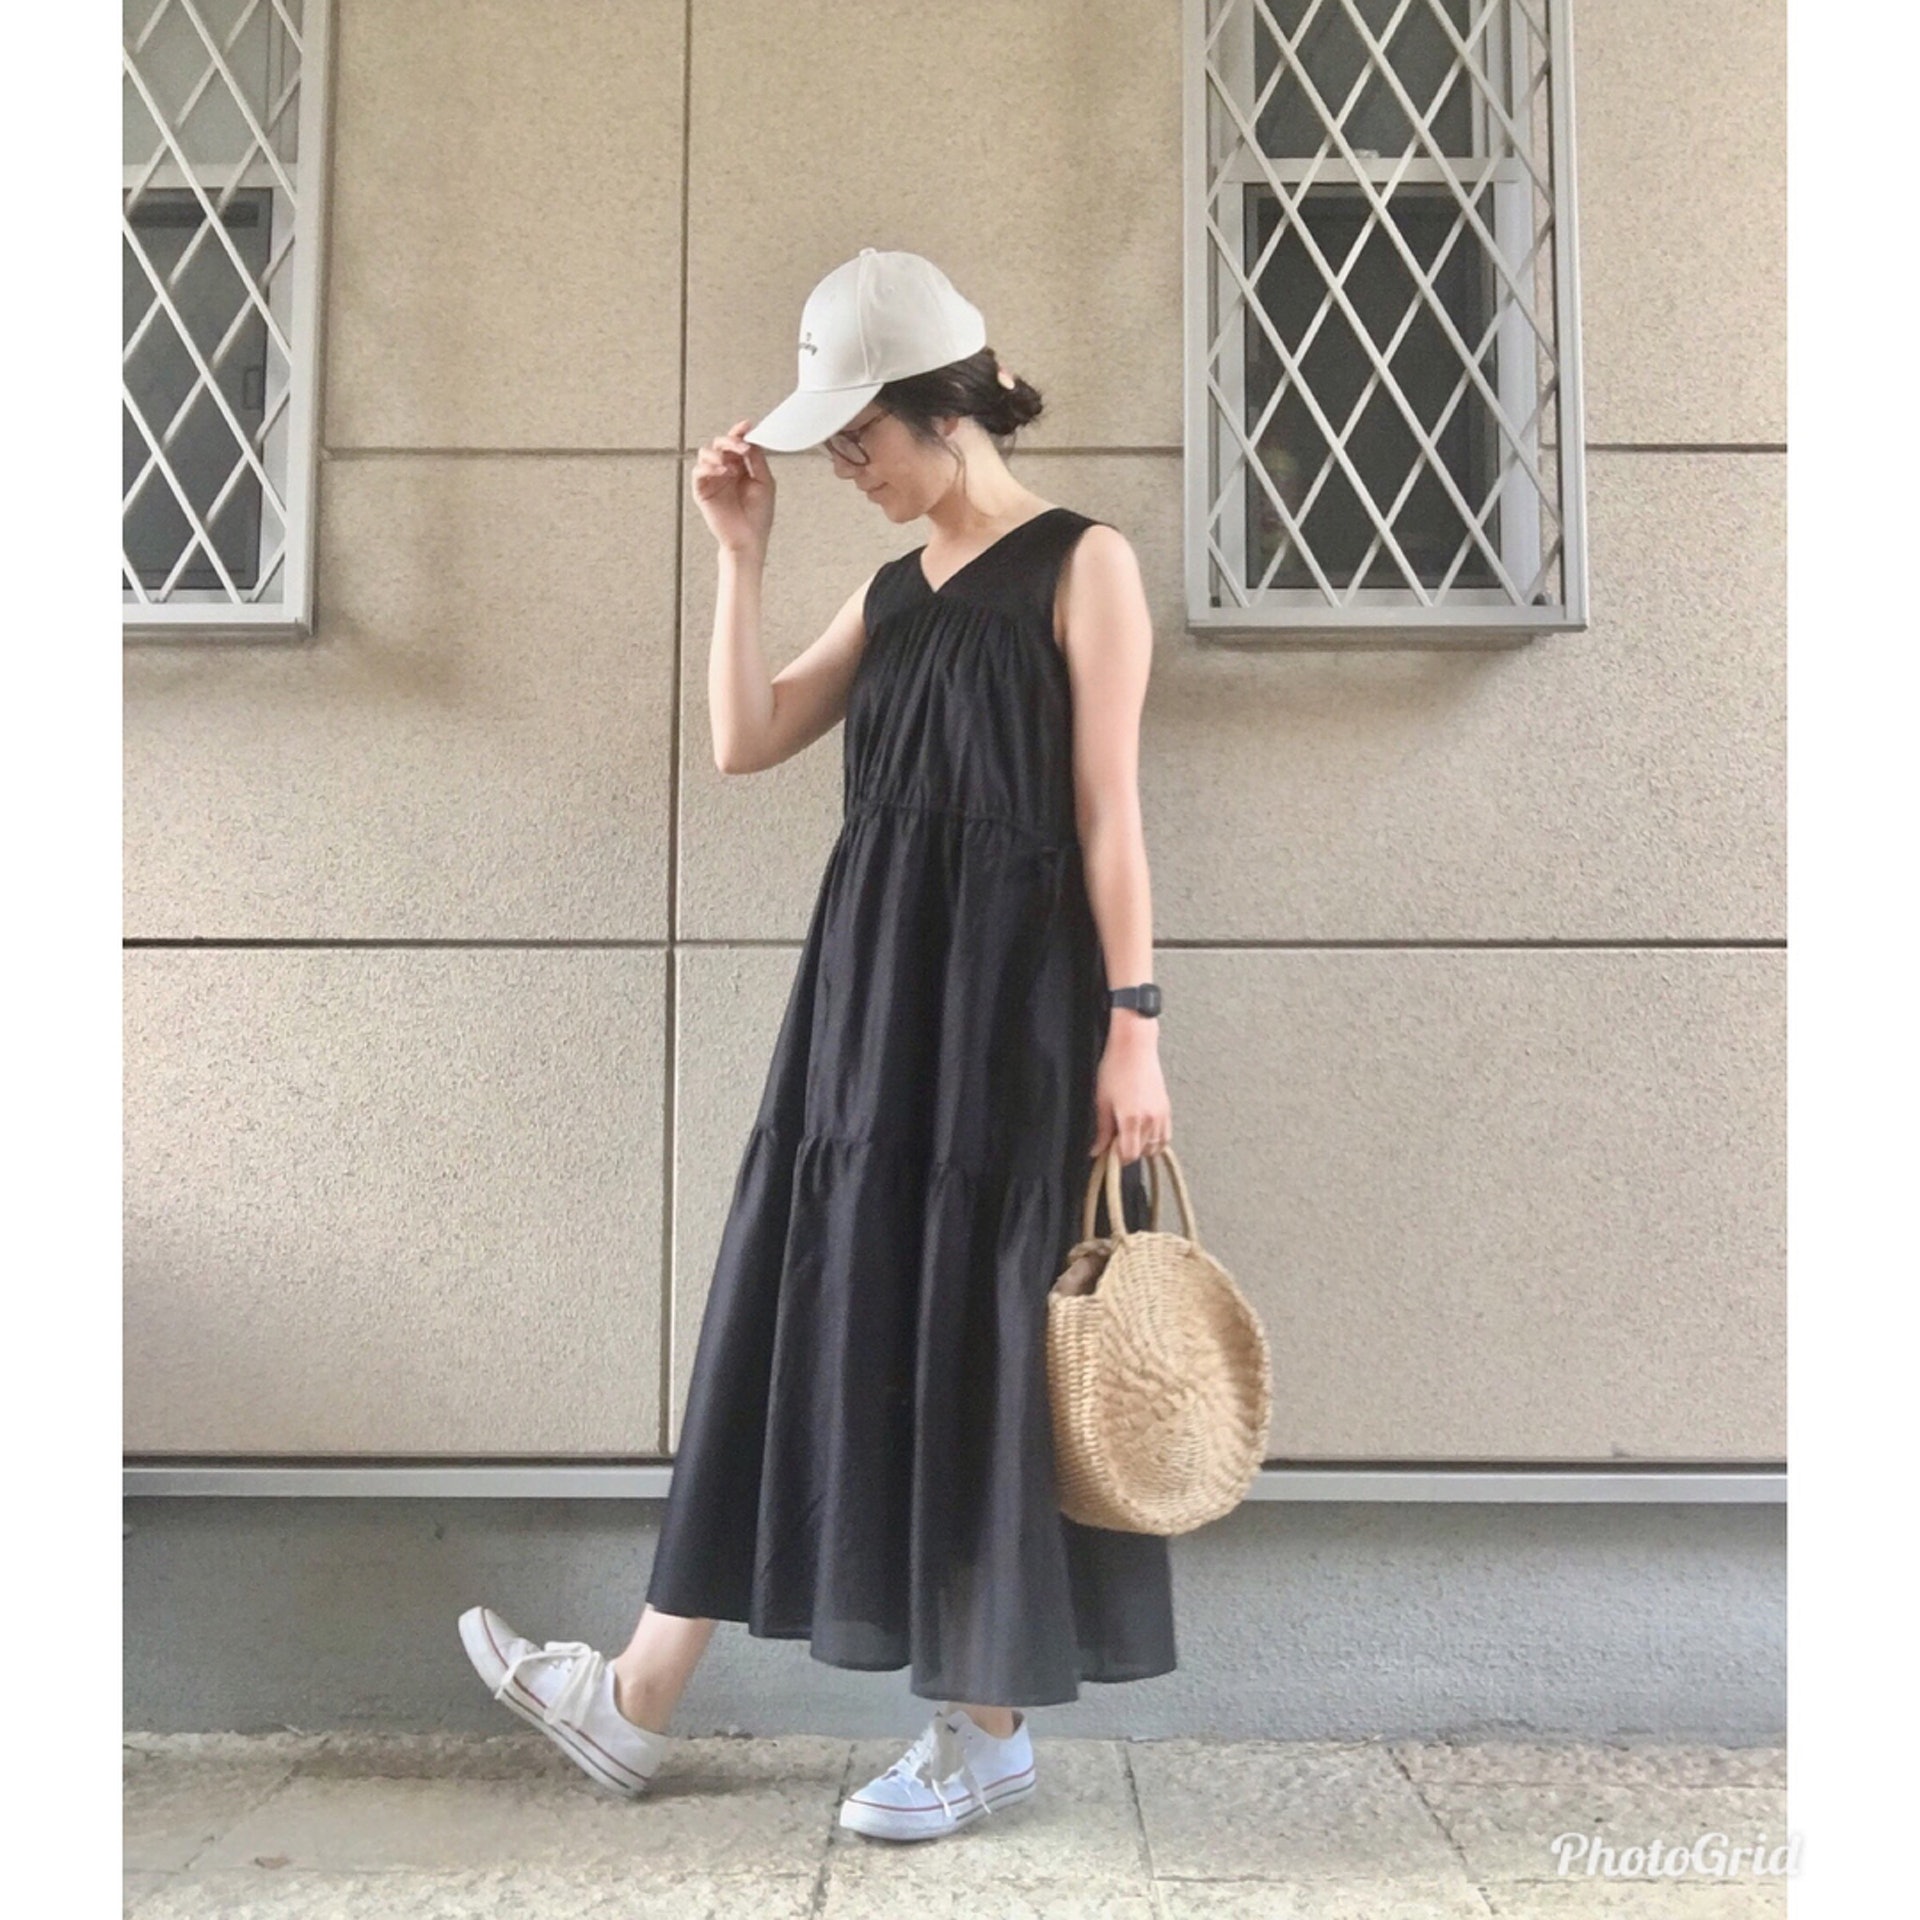 Cap帽造型常出現於日本女生ayamiii.y.m身上。(ayamiii.y.m@Instagram)